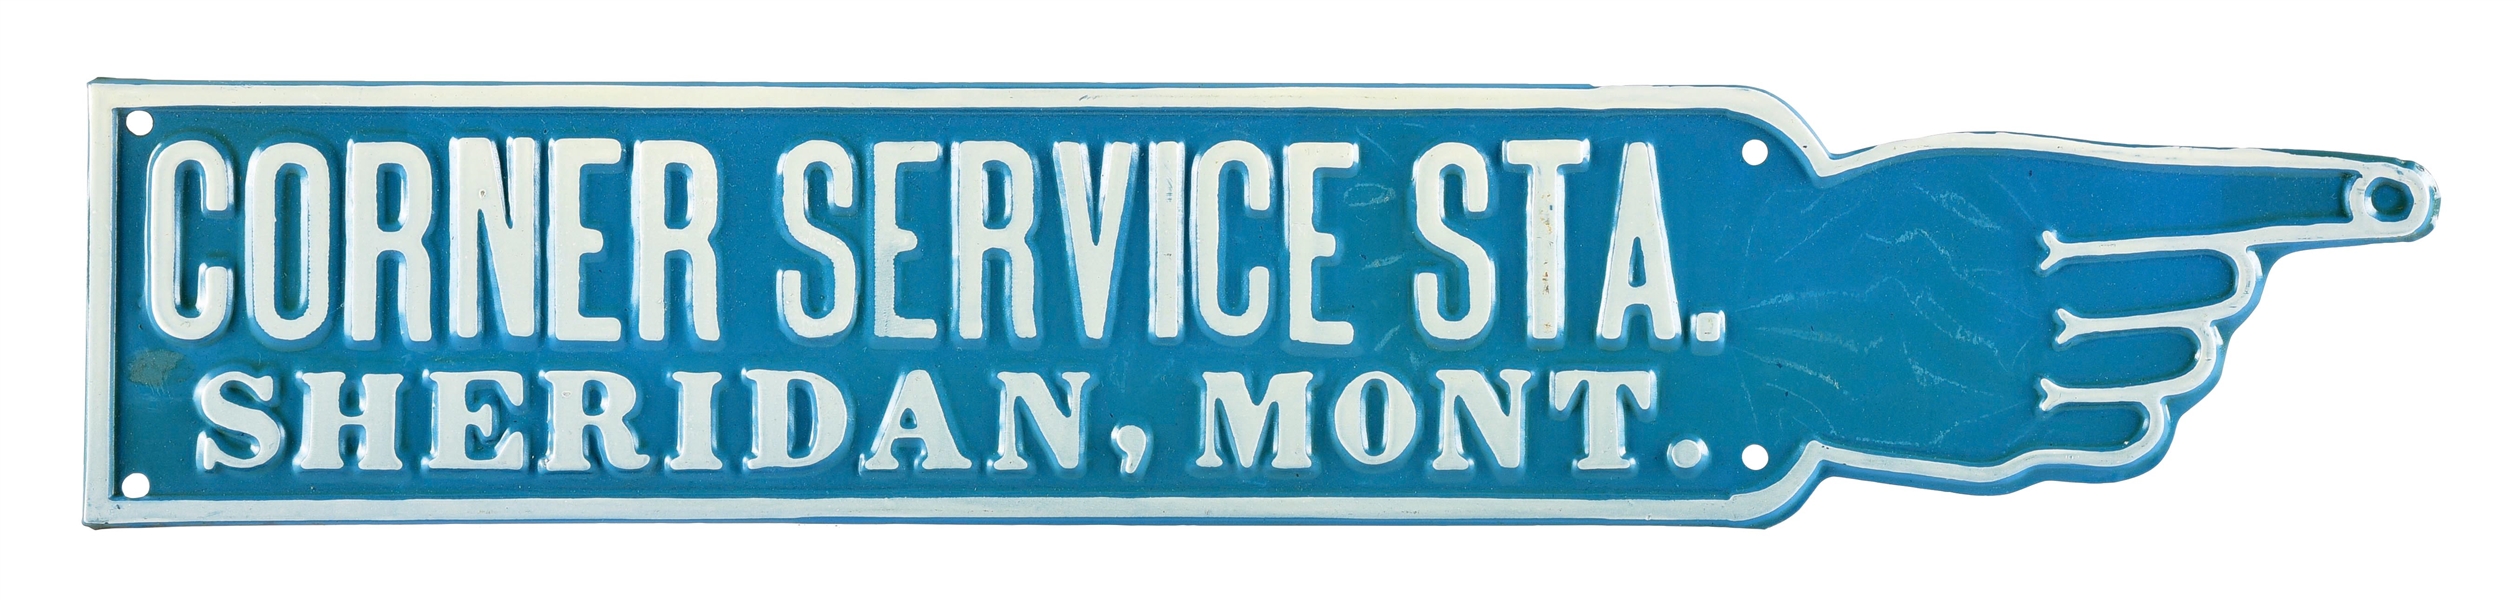 CORNER SERVICE STATION SHERIDAN MONTANA EMBOSSED TIN FINGER POINTER SIGN. 